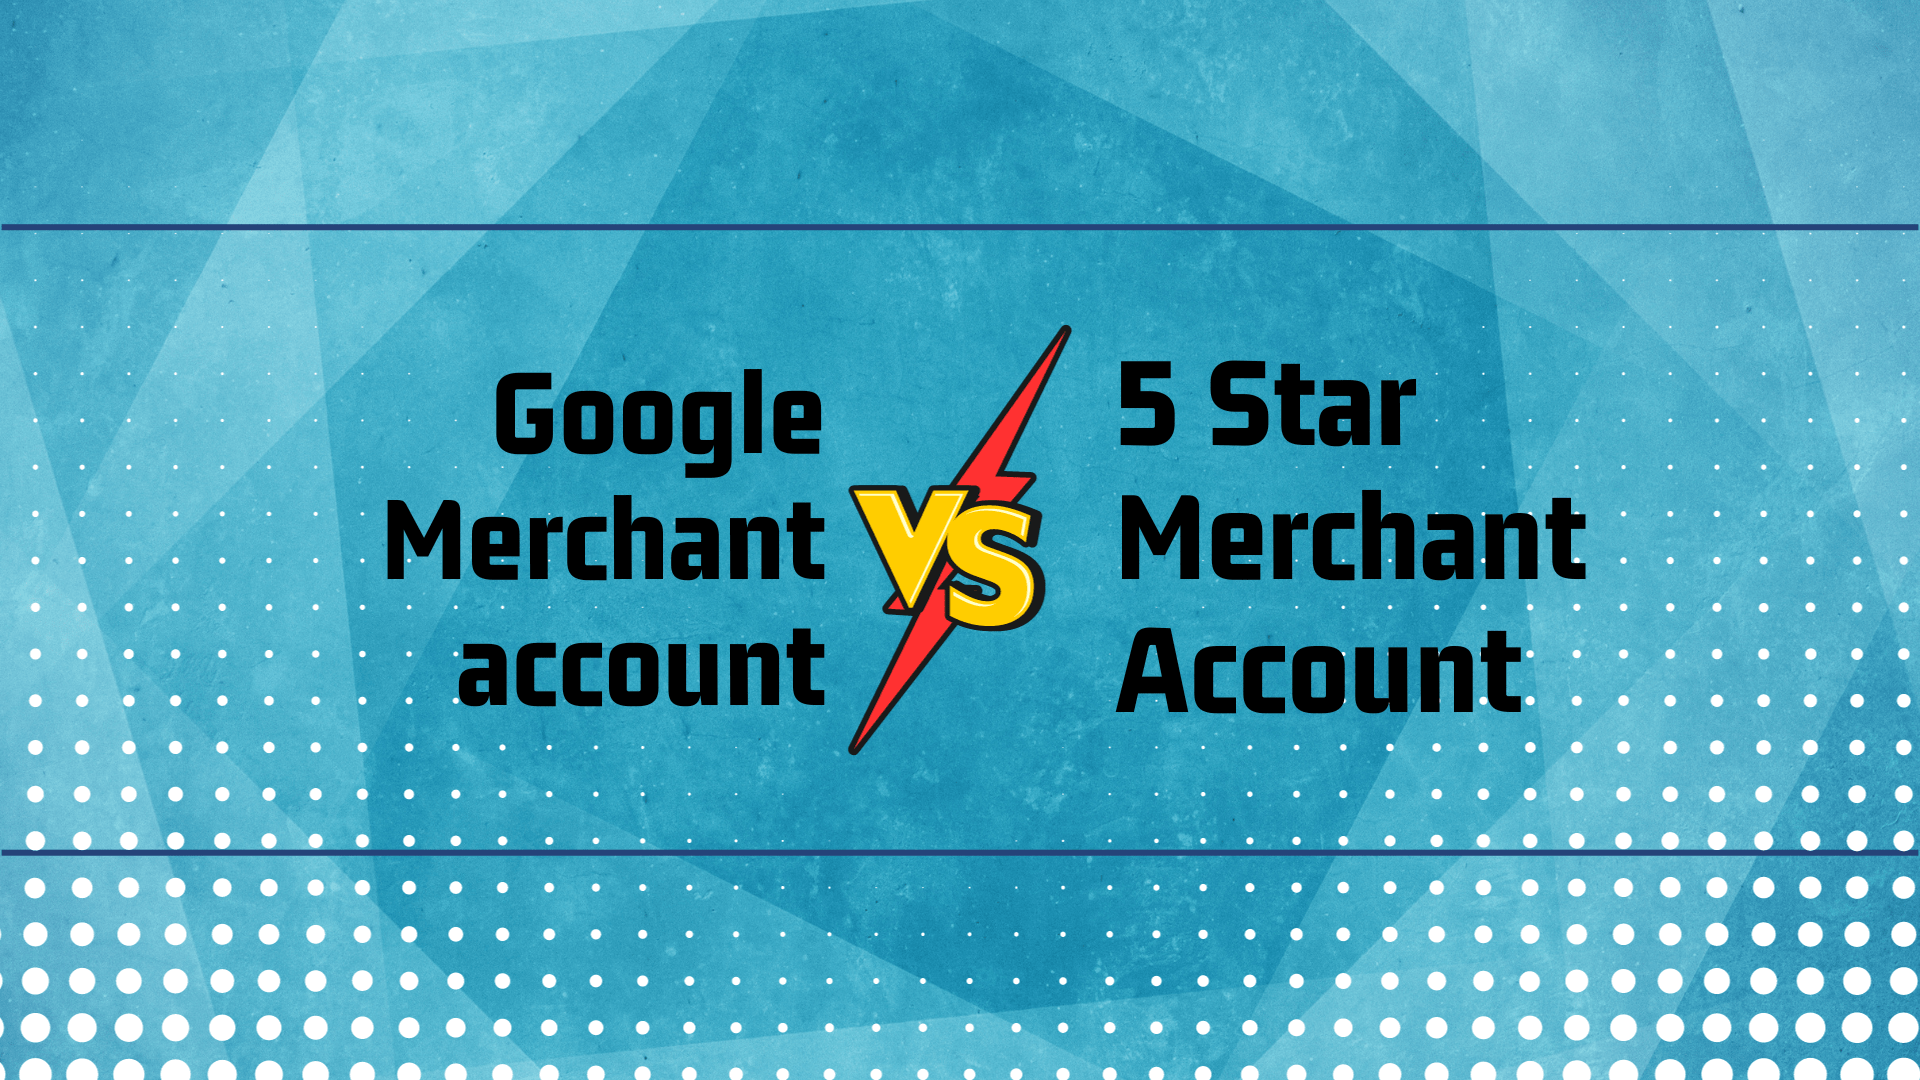 Google Merchant account